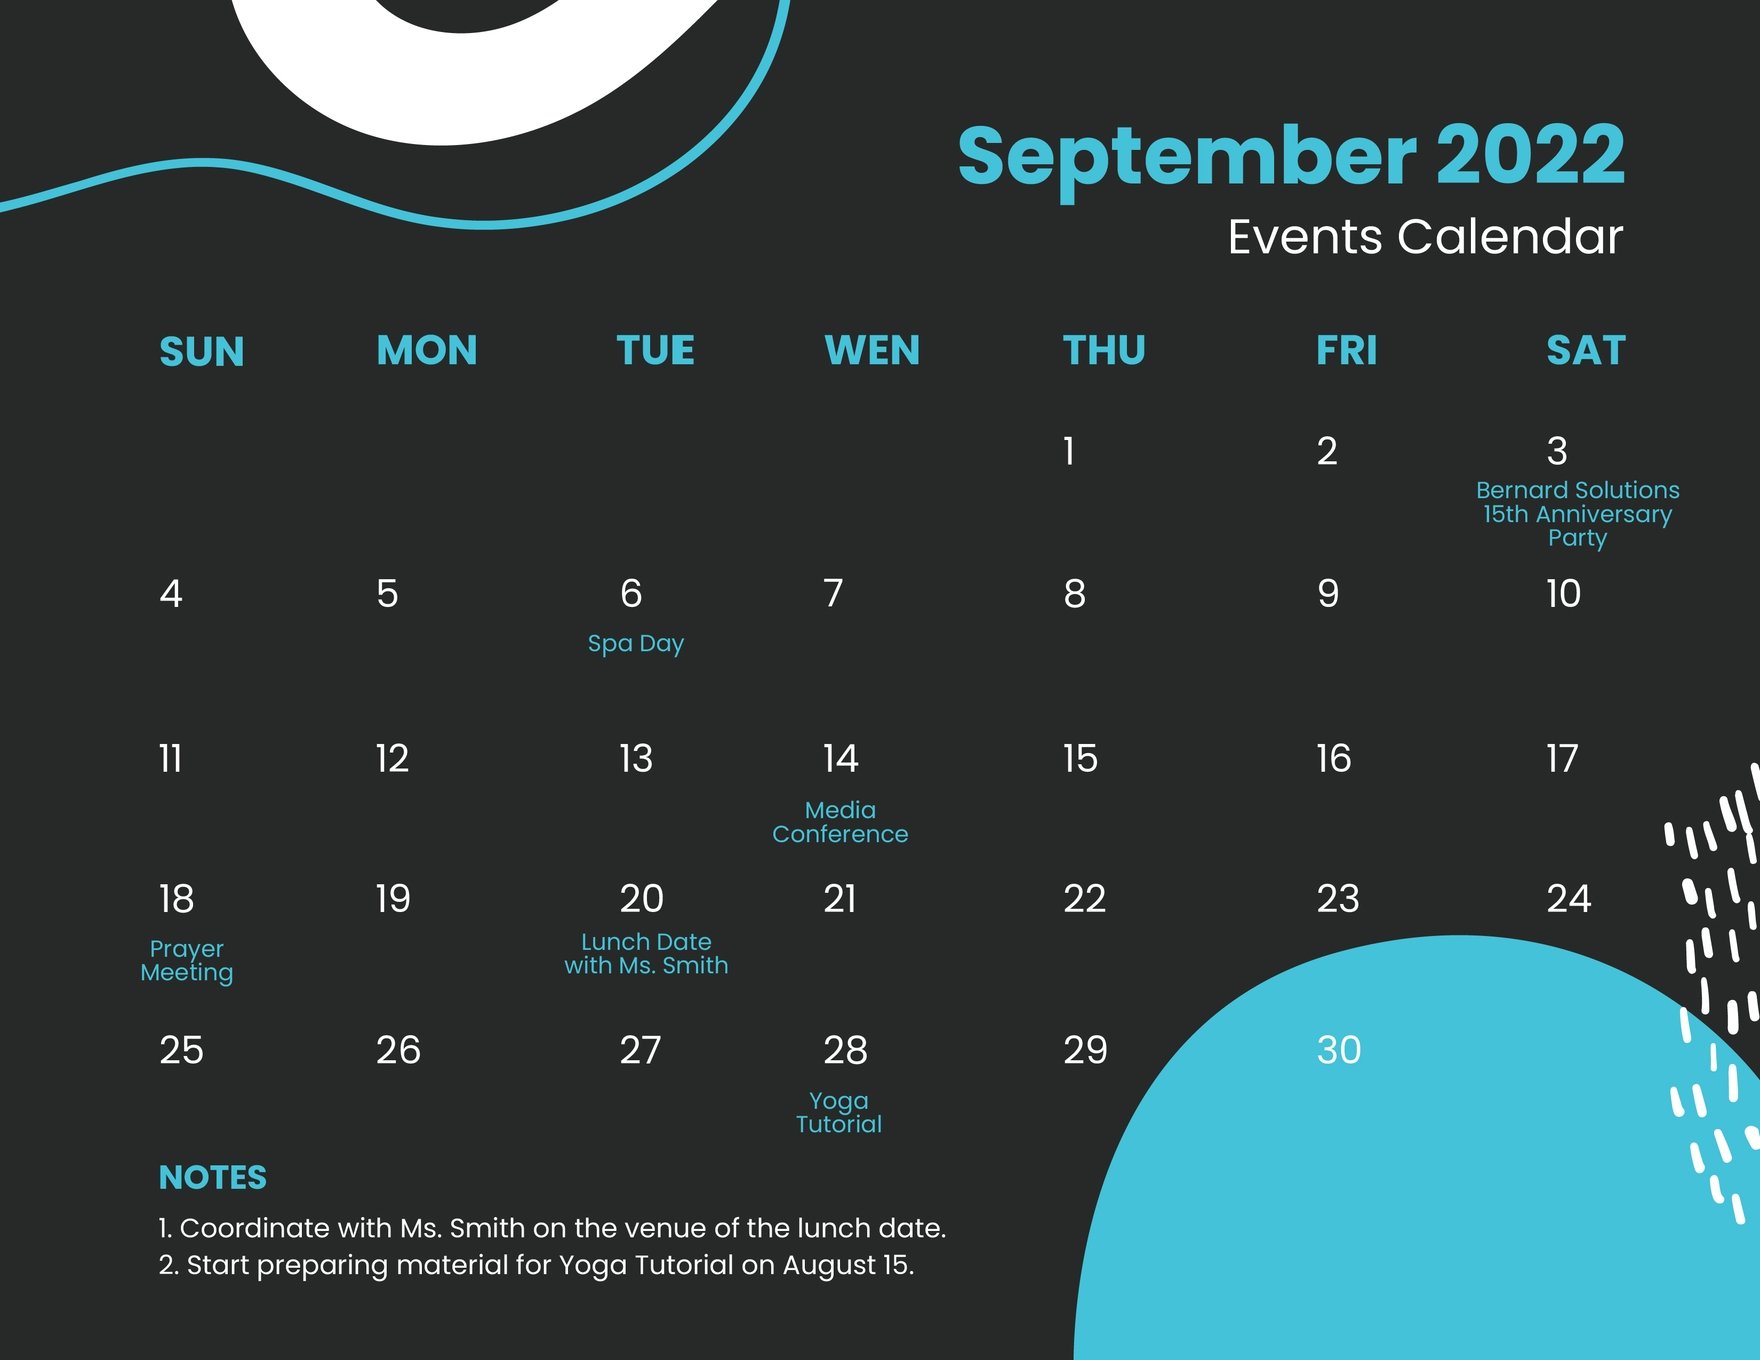 September 2022 Calendar Template in Word, Illustrator, PSD